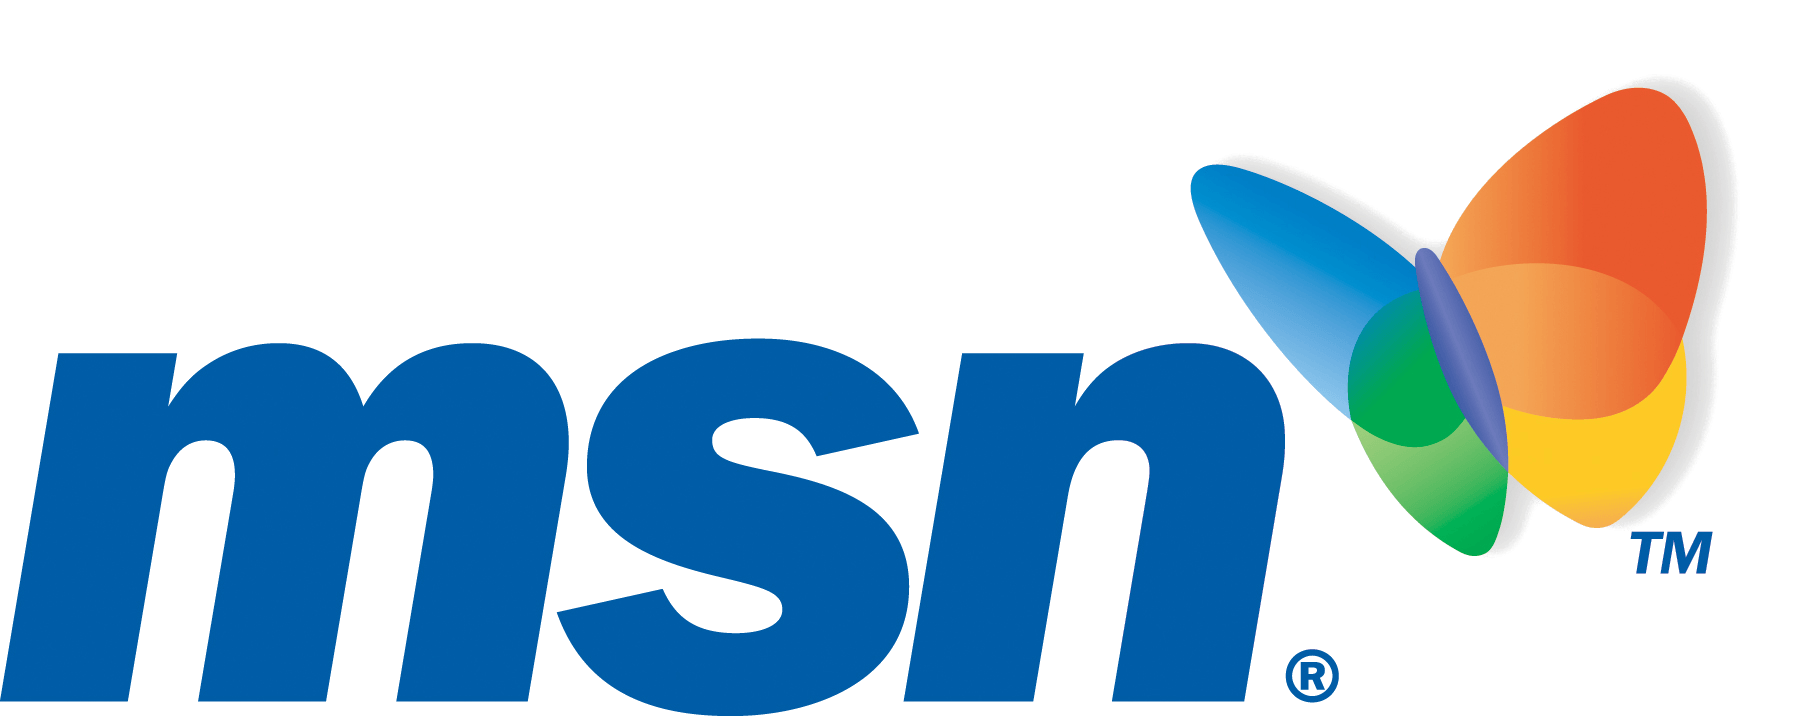 MSN Blue Logo - MSN slowly returning after global outage. Brands + Logos + Branding